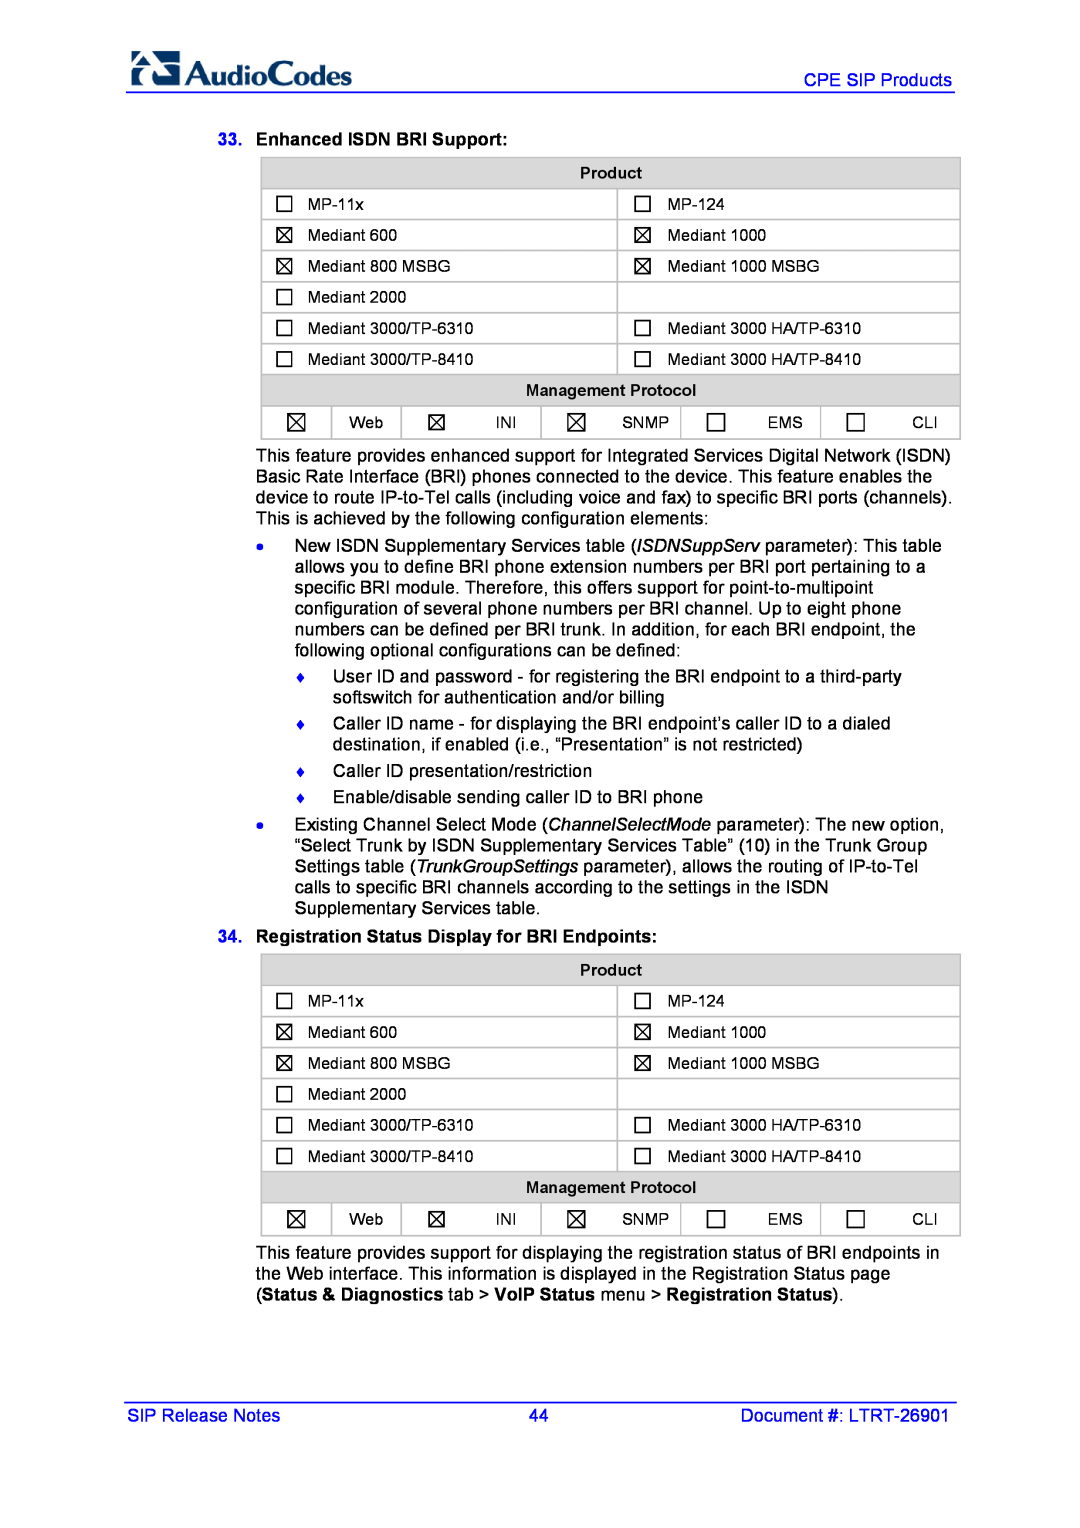 AudioControl VERSION 6.2 manual Enhanced ISDN BRI Support, Registration Status Display for BRI Endpoints 